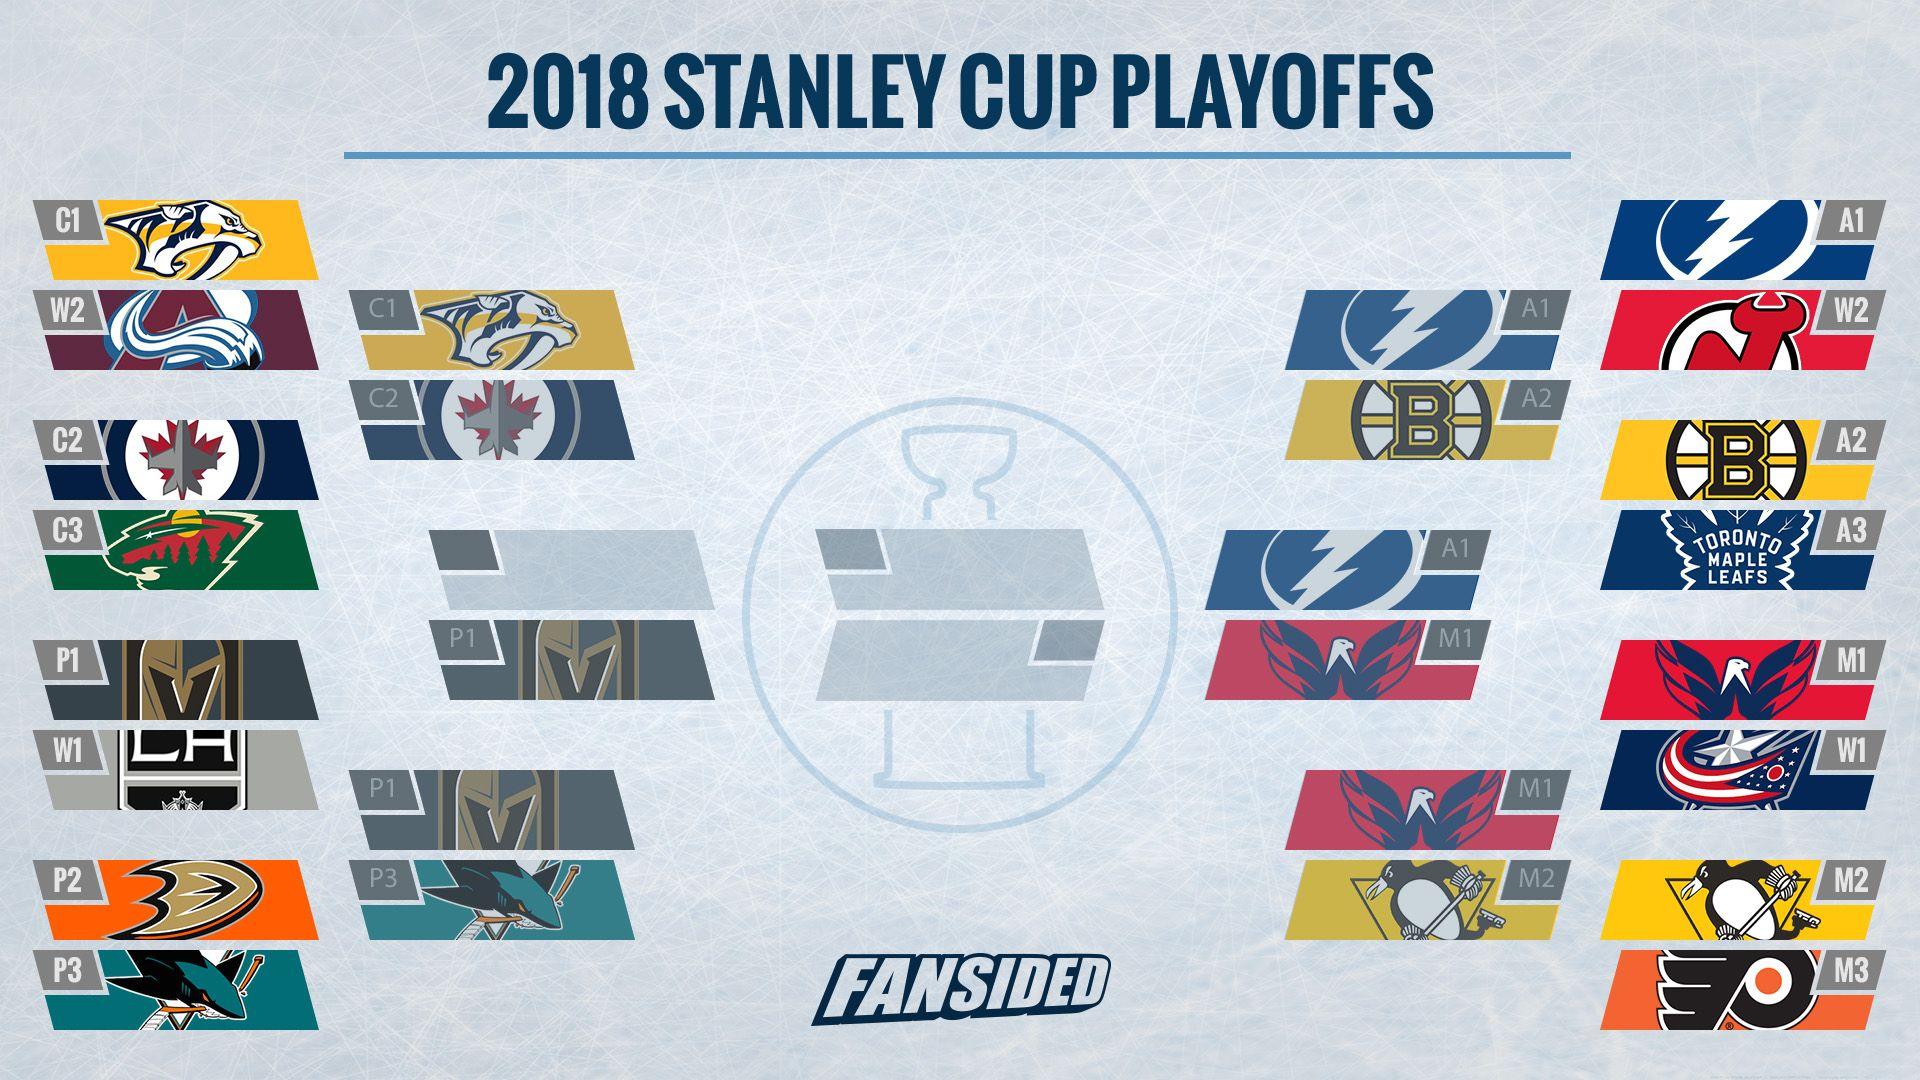 NHL playoffs 2018: Updated bracket after Capitals beat Penguins